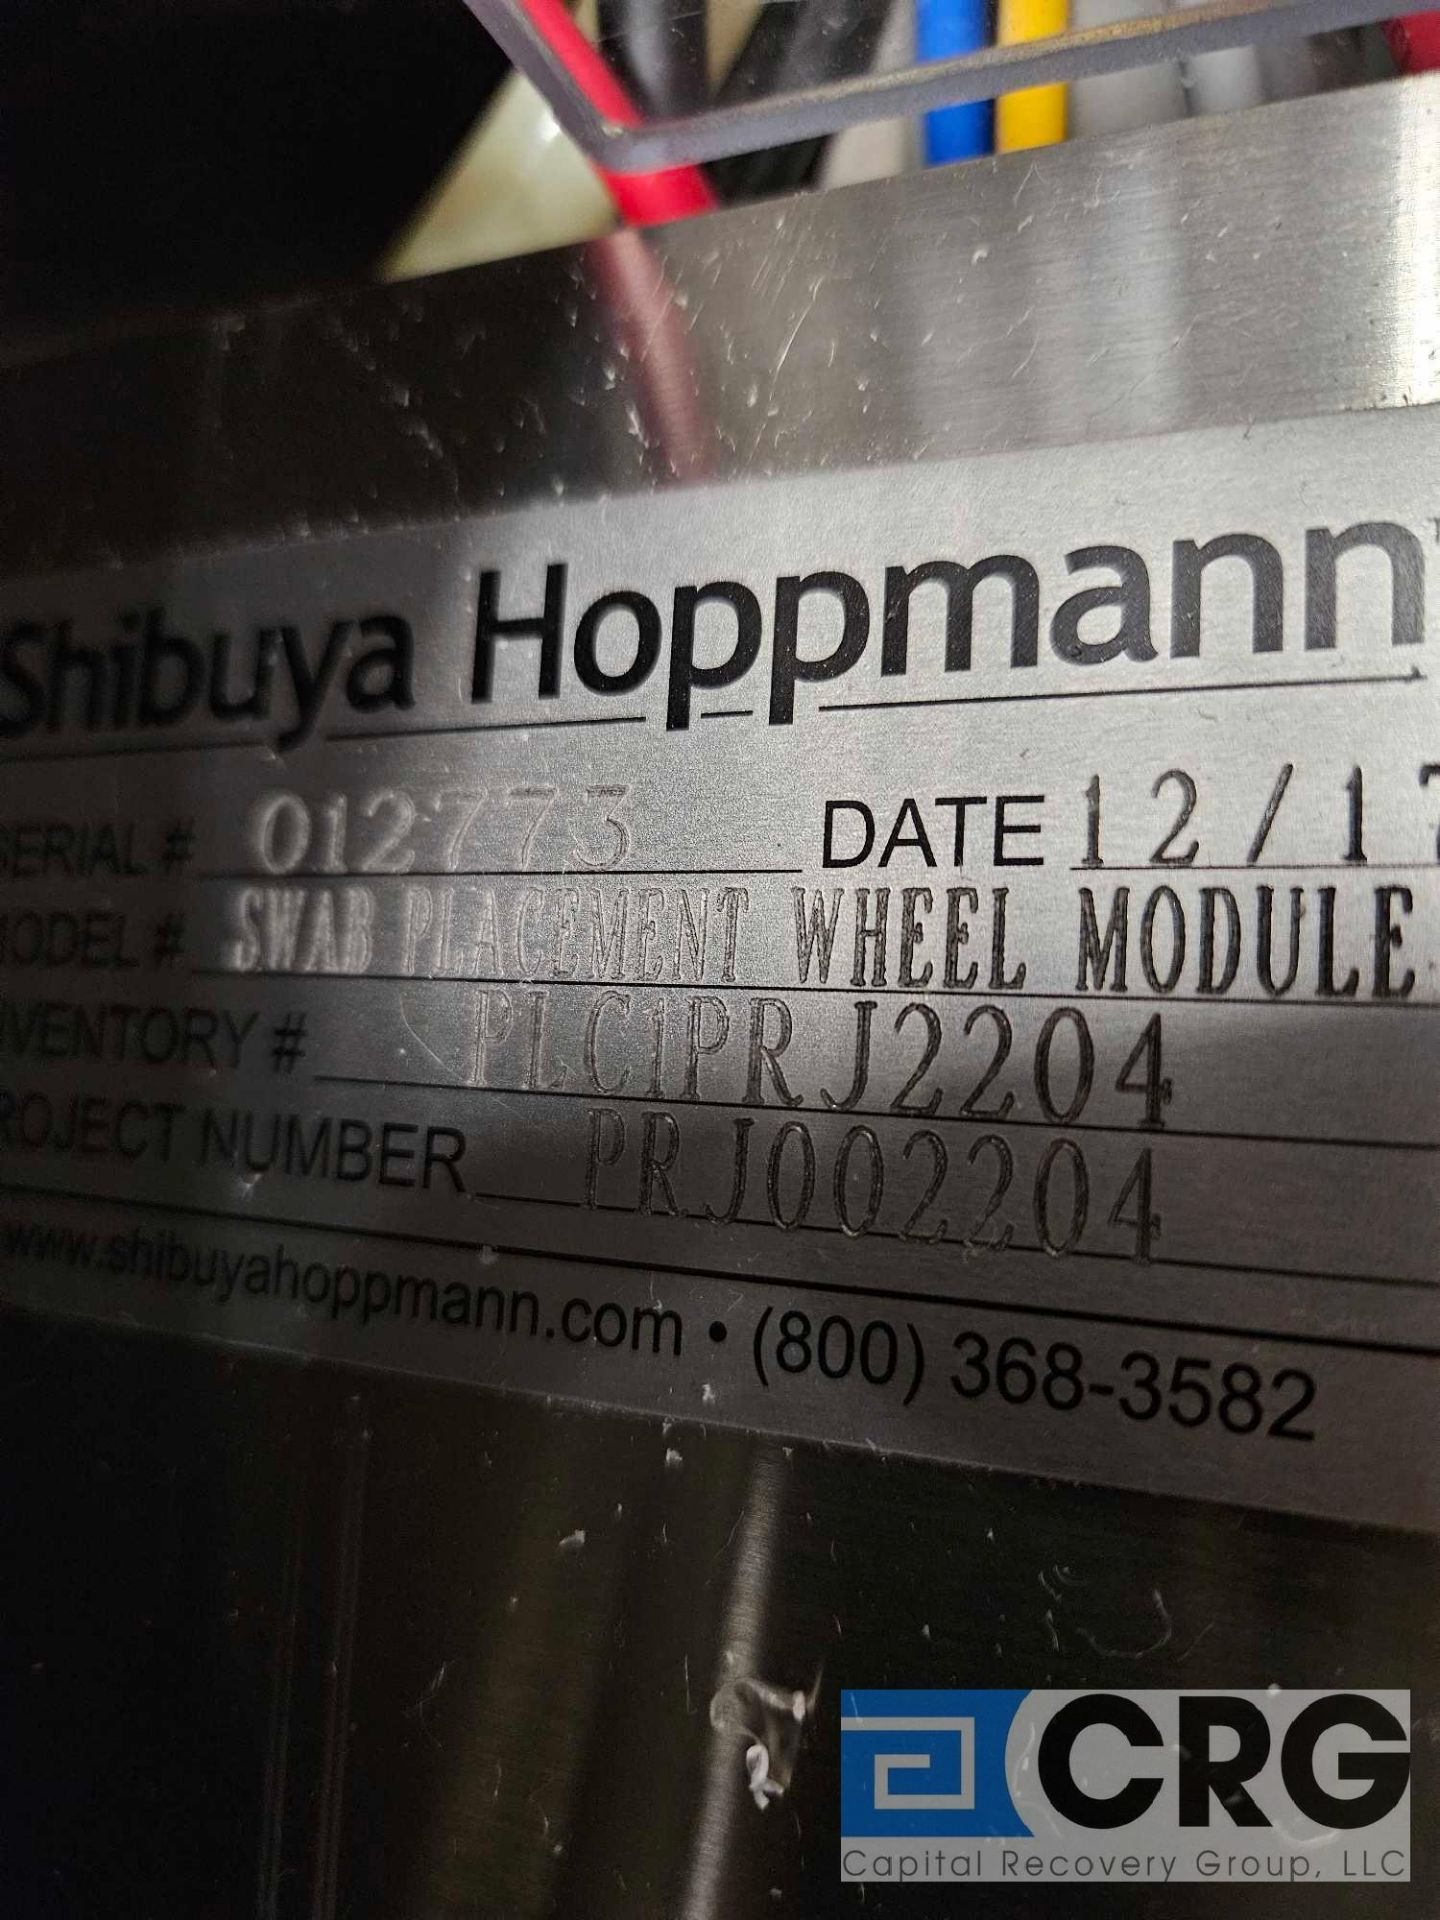 Shibuya Hoppman Swab Placement Wheel Module - Image 3 of 7